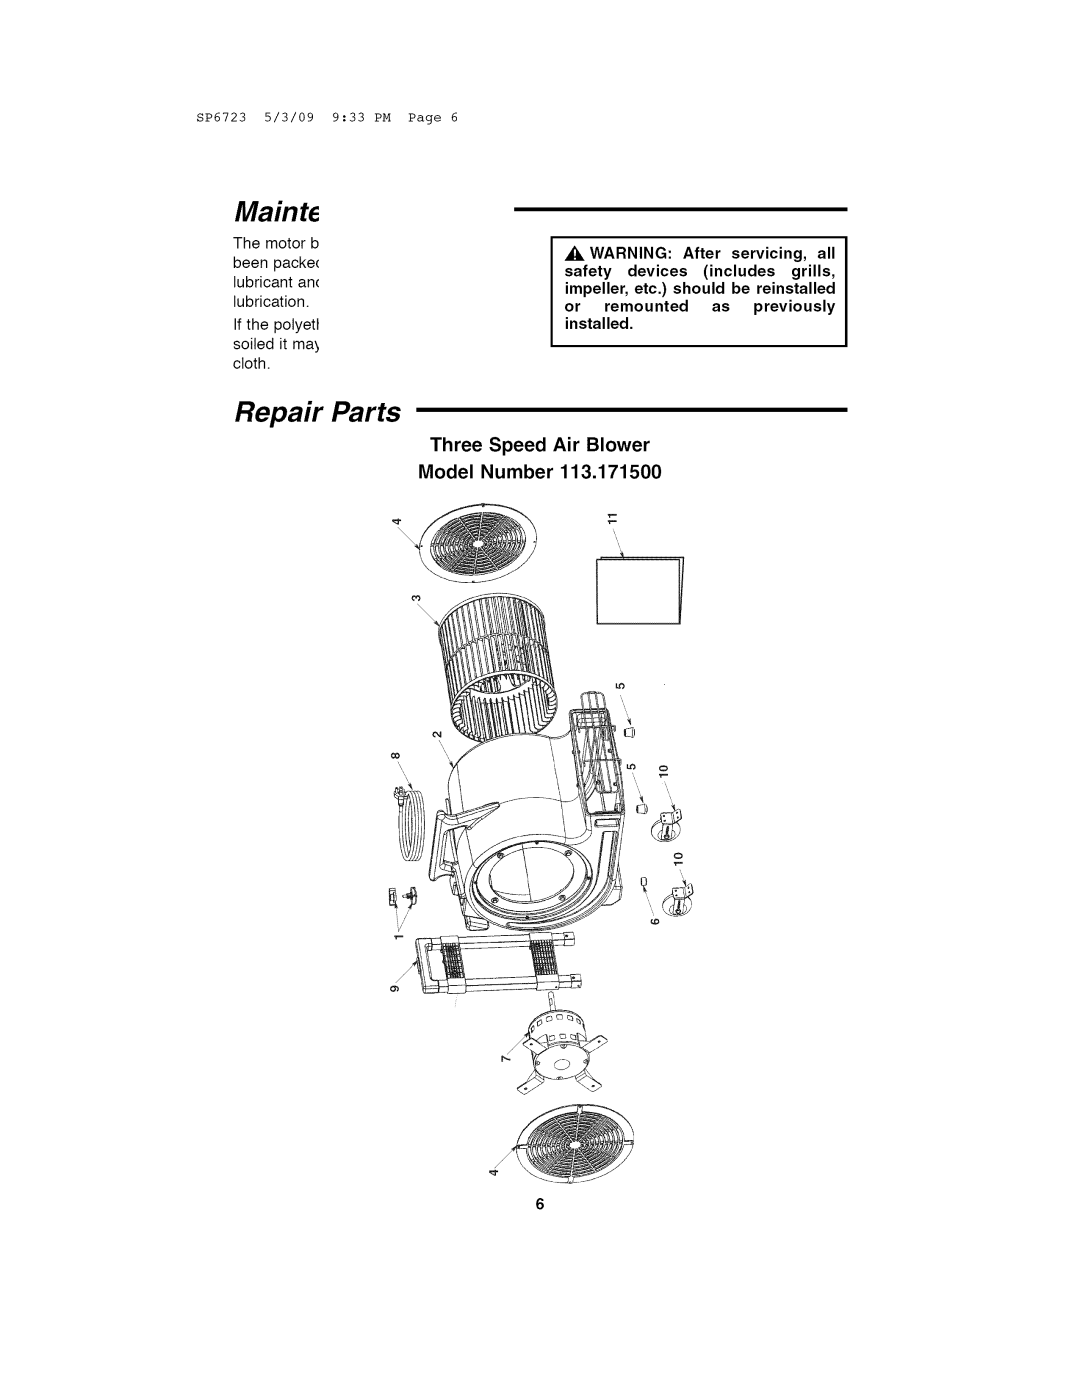 Univex 113.171500 owner manual Maint, Repair Parts, Three Speed Air Blower Model Number 